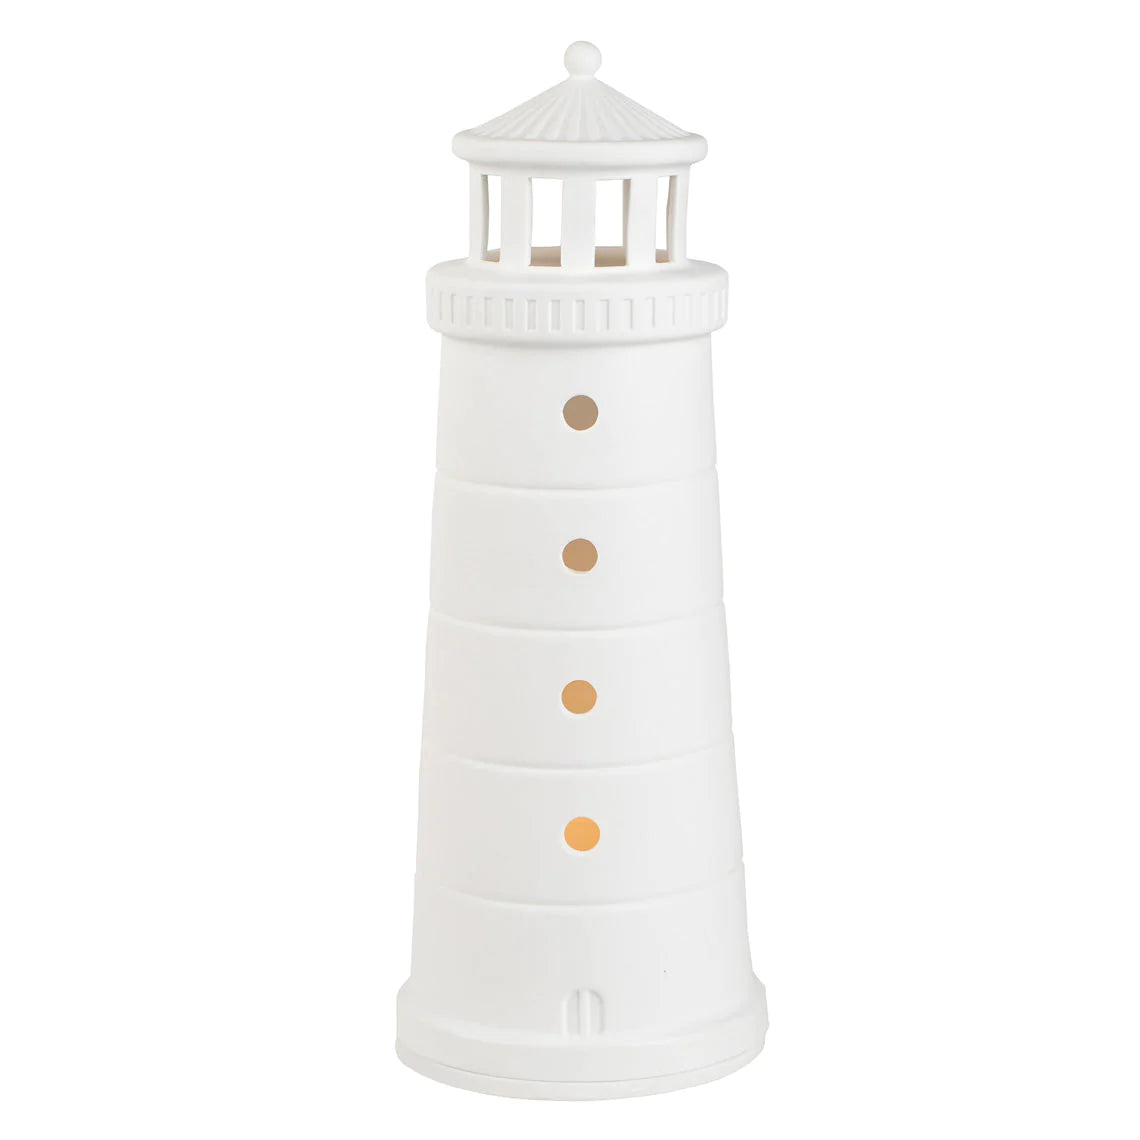 Beyond The Sea Lighthouse Tealight Holder - Large - 15.7"